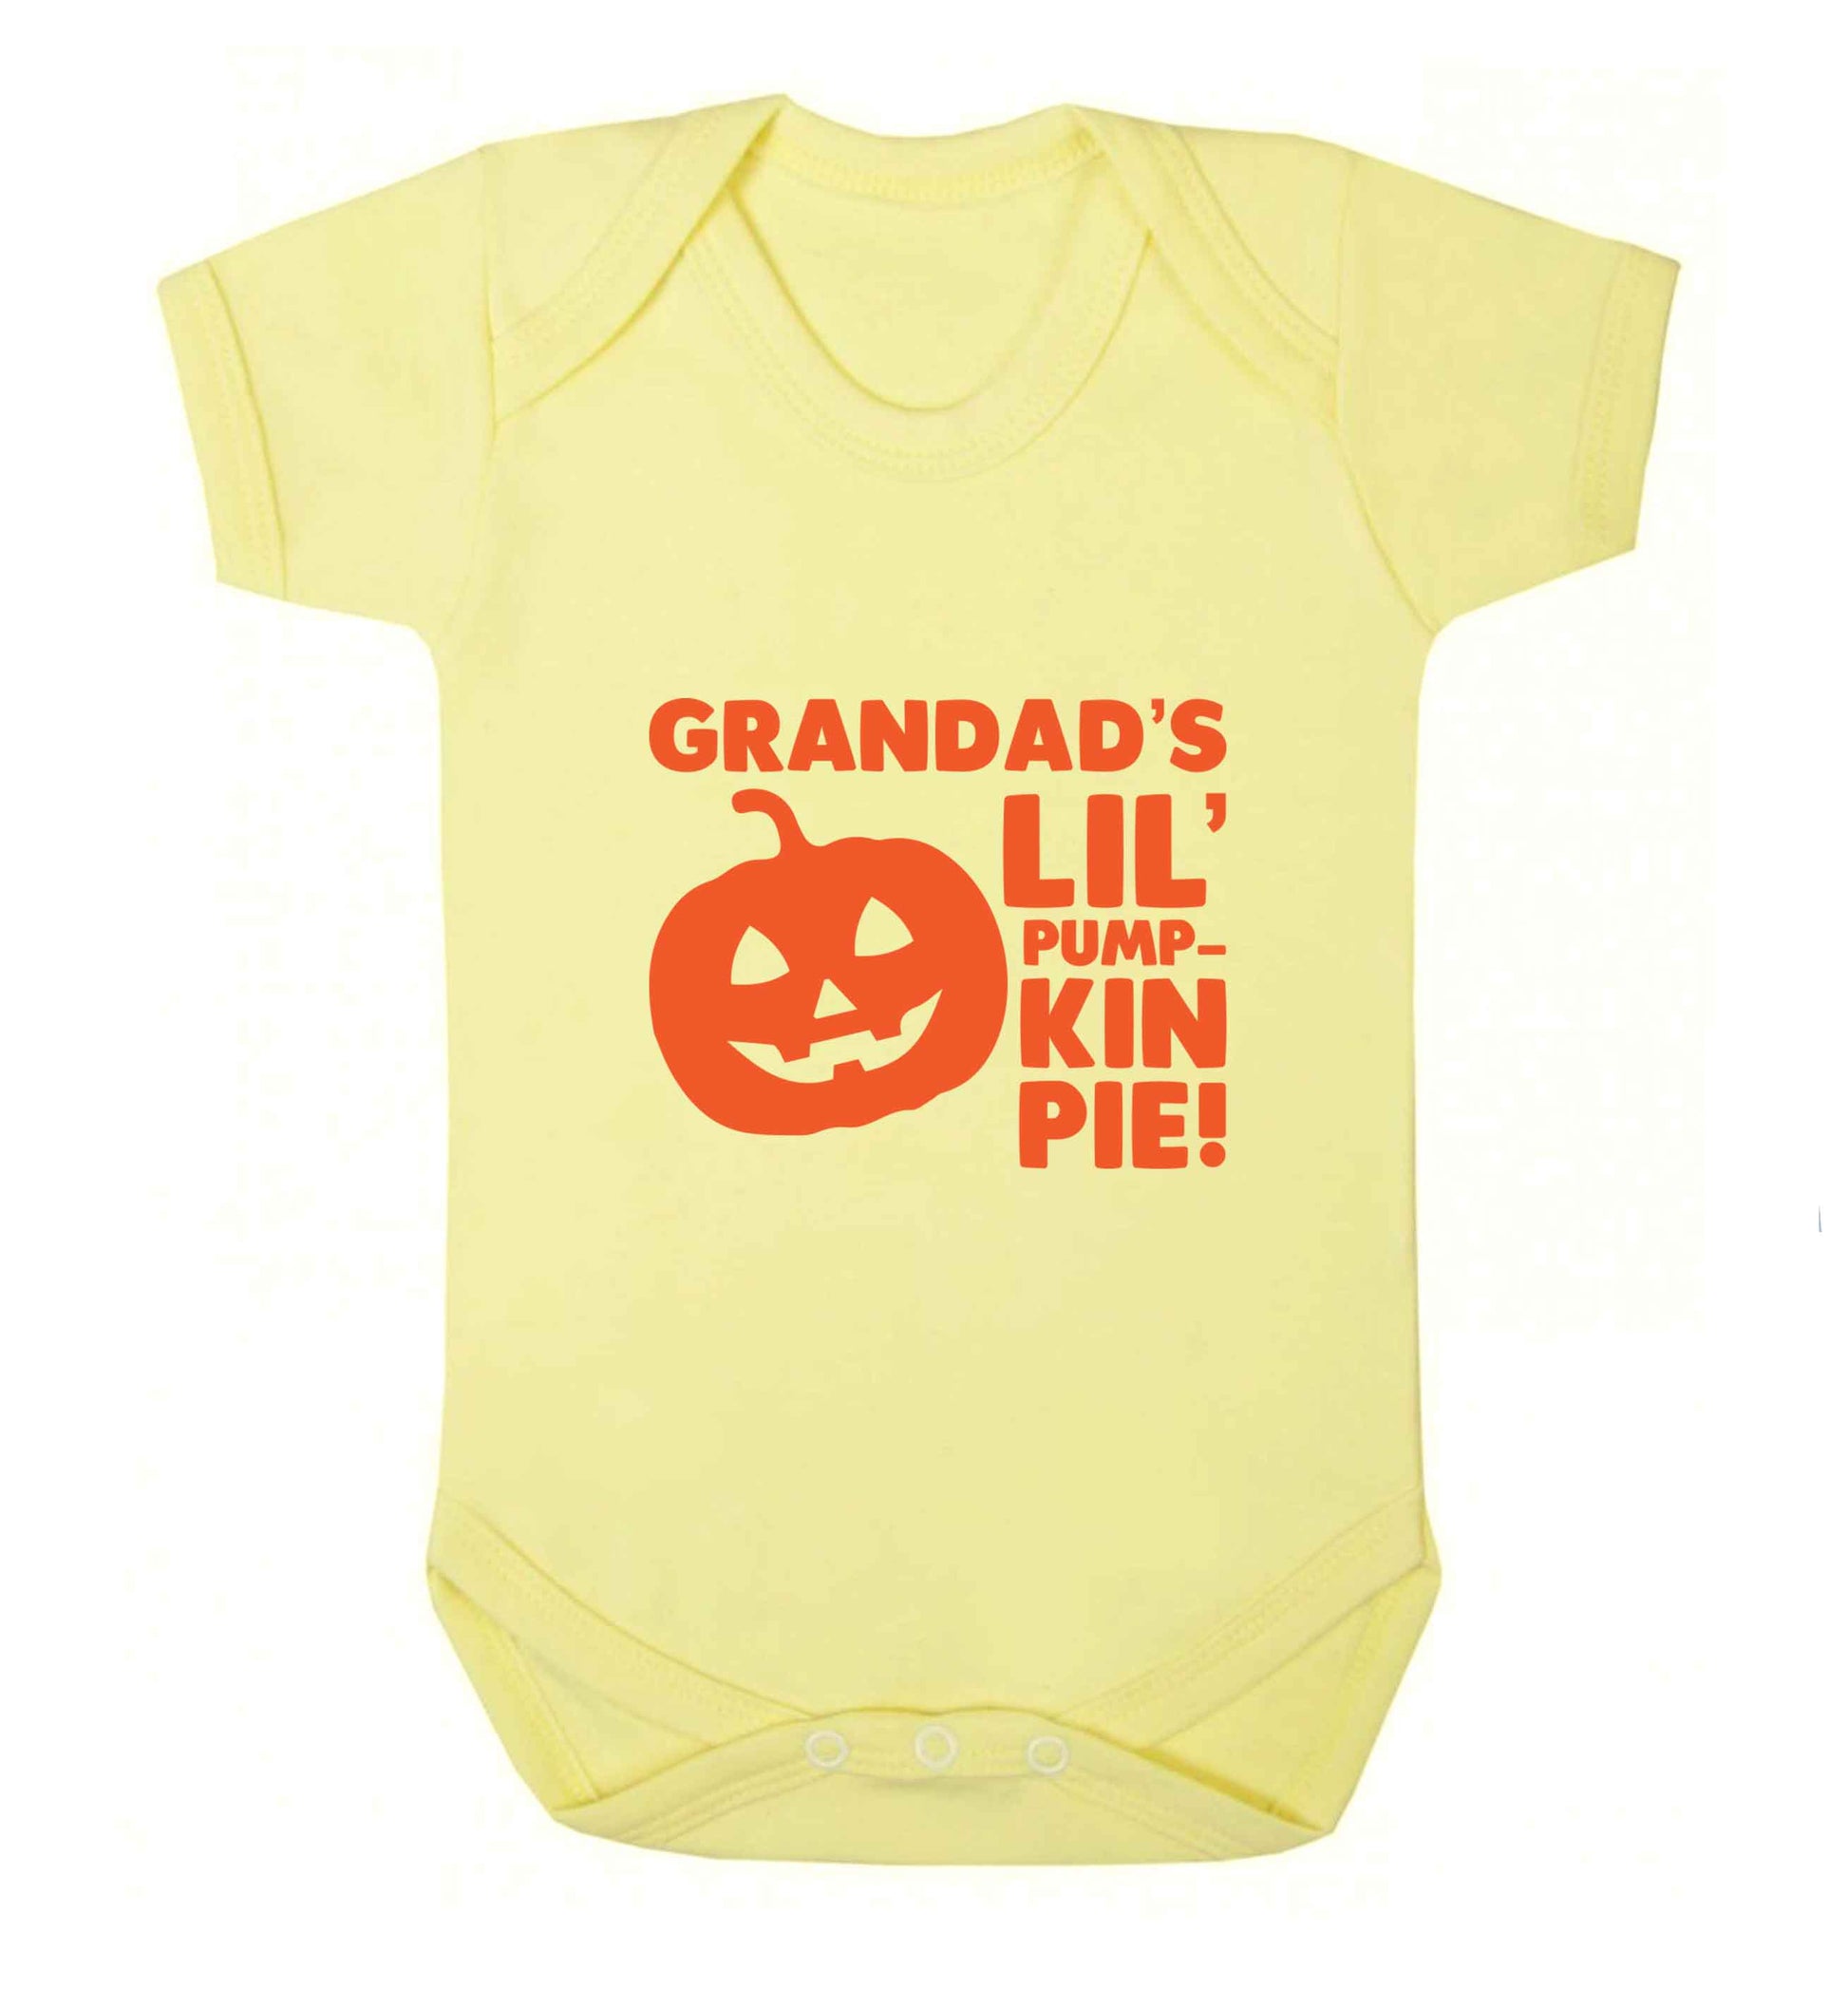 Grandad's lil' pumpkin pie baby vest pale yellow 18-24 months